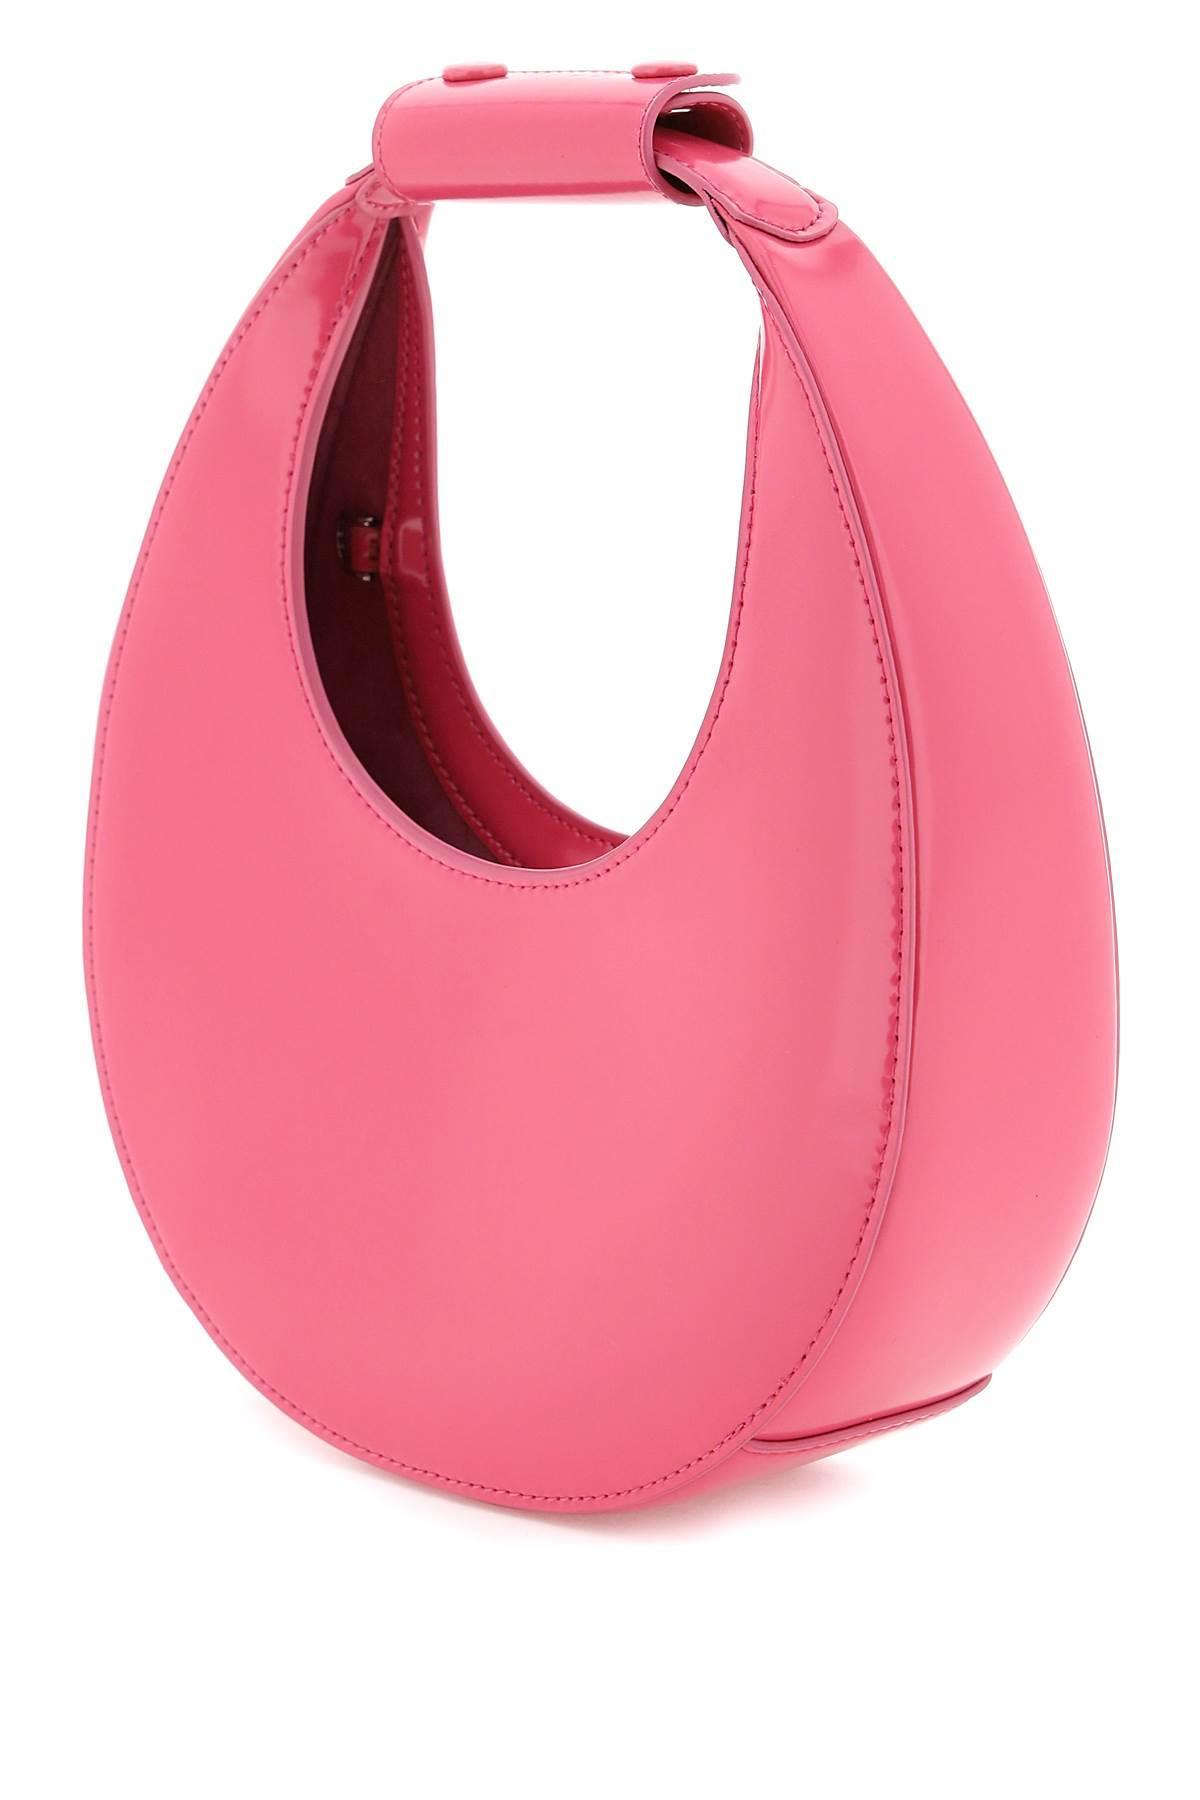 STAUD Mini Moon Leather Bag in Pink | Lyst